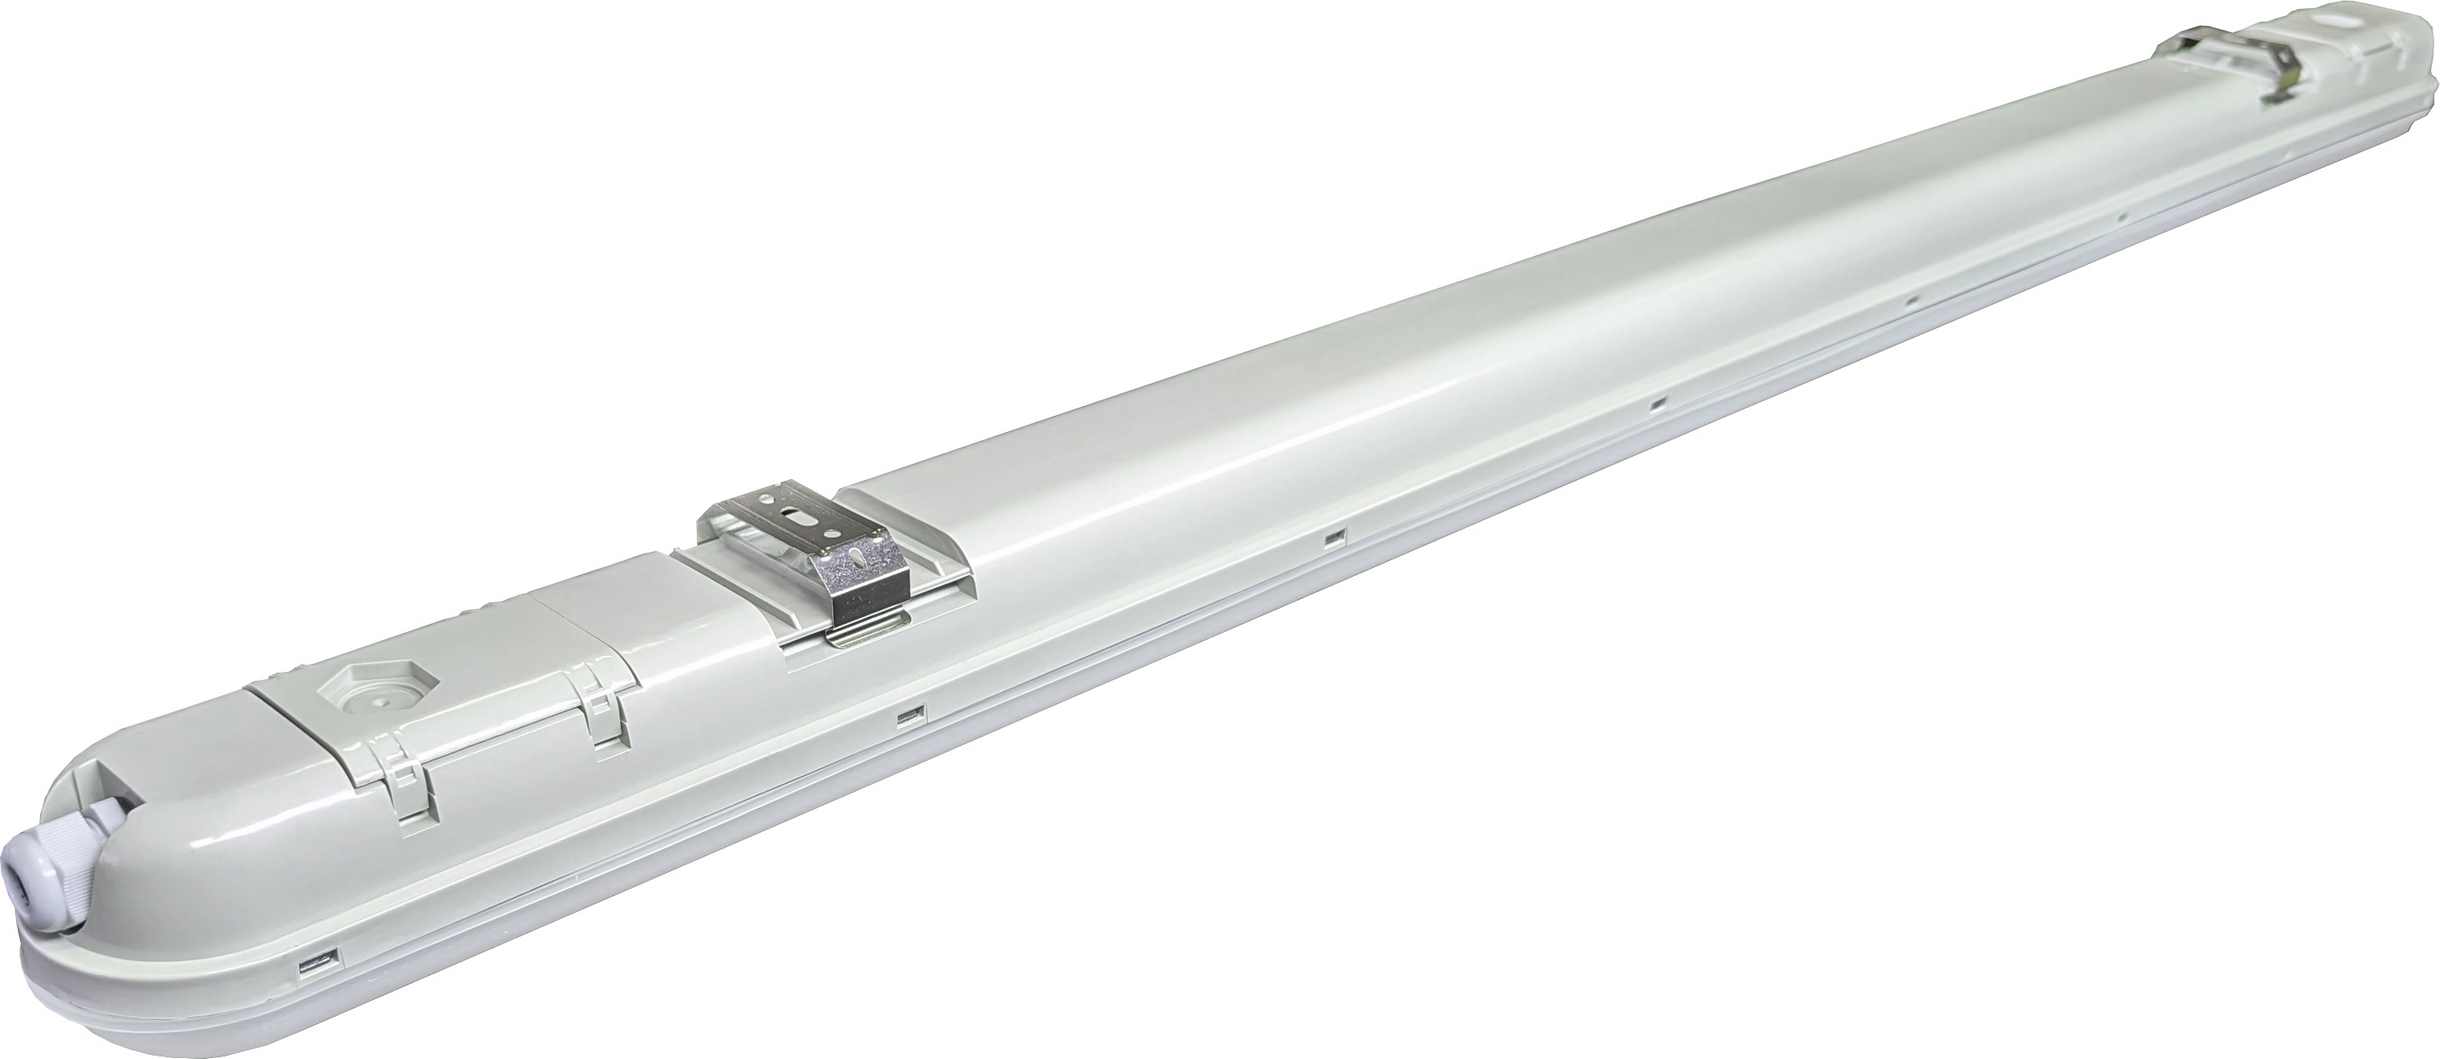 LED prachotìsné svítidlo LED TRUSTER-CM 3G 38W NW, 1200 mm,4000K, 5100lm, IP65, Greenlux GXWP324 - zvìtšit obrázek